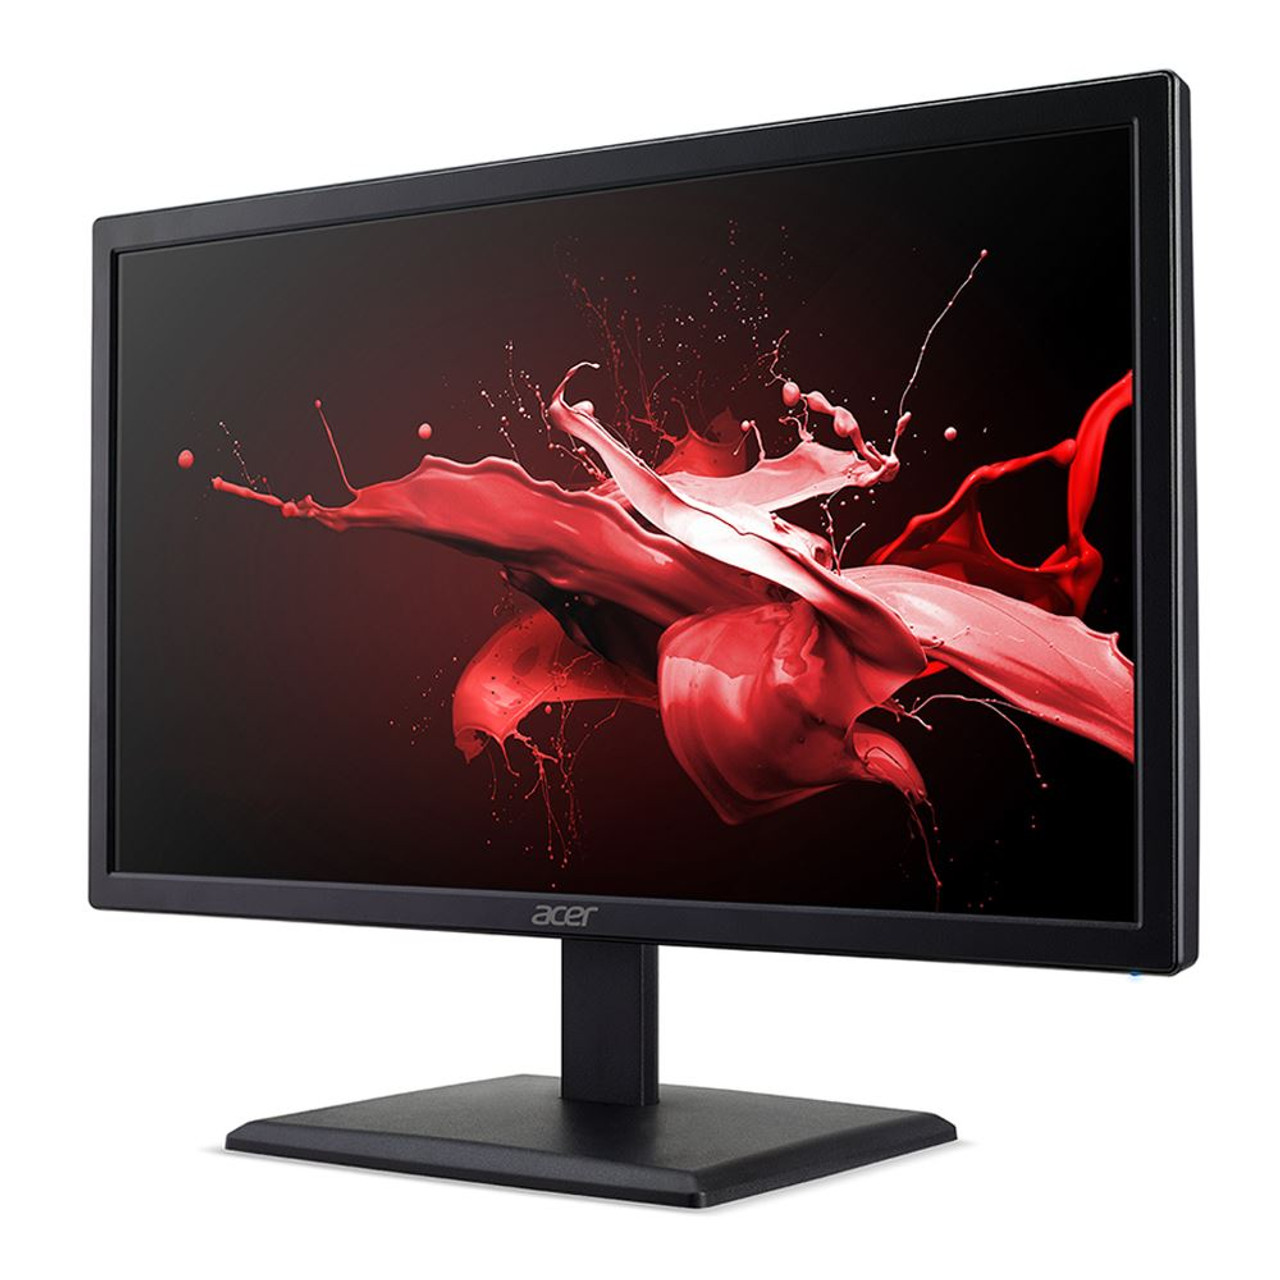 Acer EG0 21.5" - LCD Monitor FullHD 1920x1080 144Hz 16:9 TN 1ms 250Nit